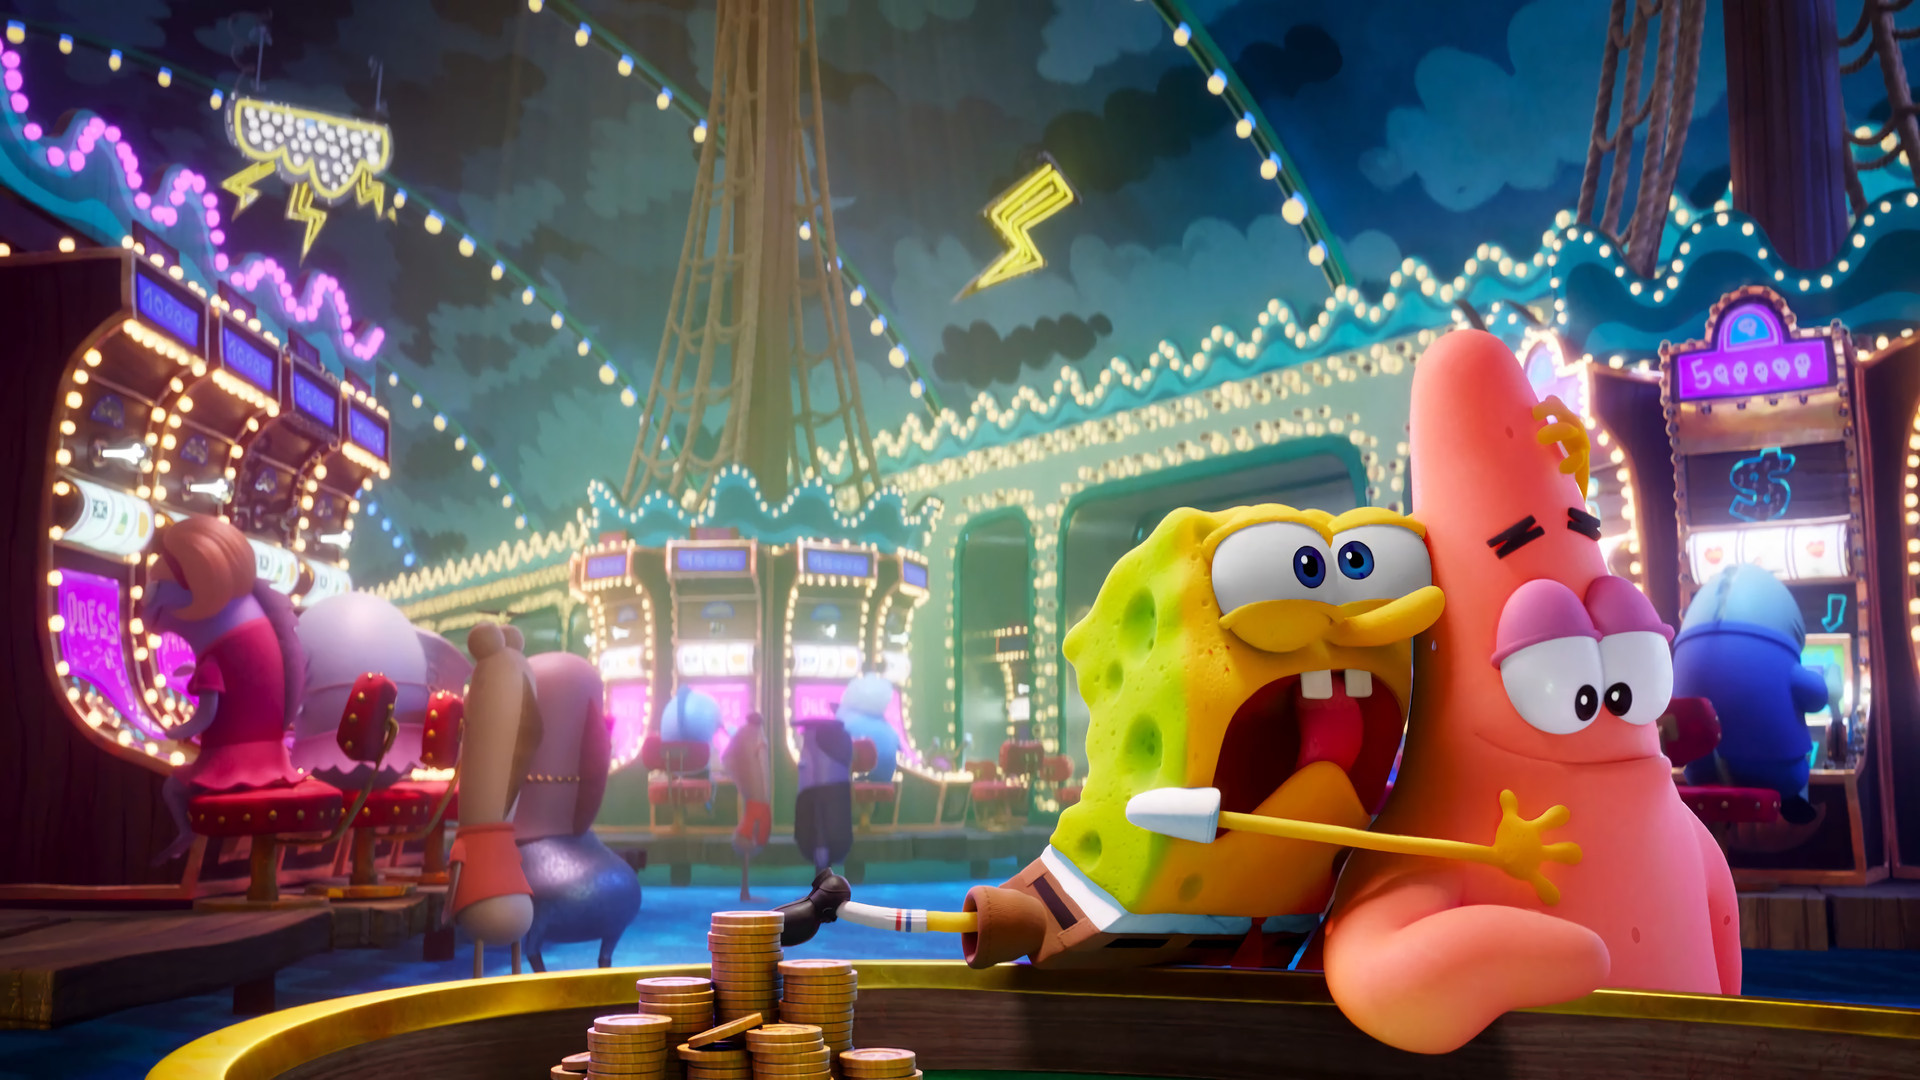 SpongeBob Movie, Adventure details, 2020 wallpapers, Mega themes, 1920x1080 Full HD Desktop